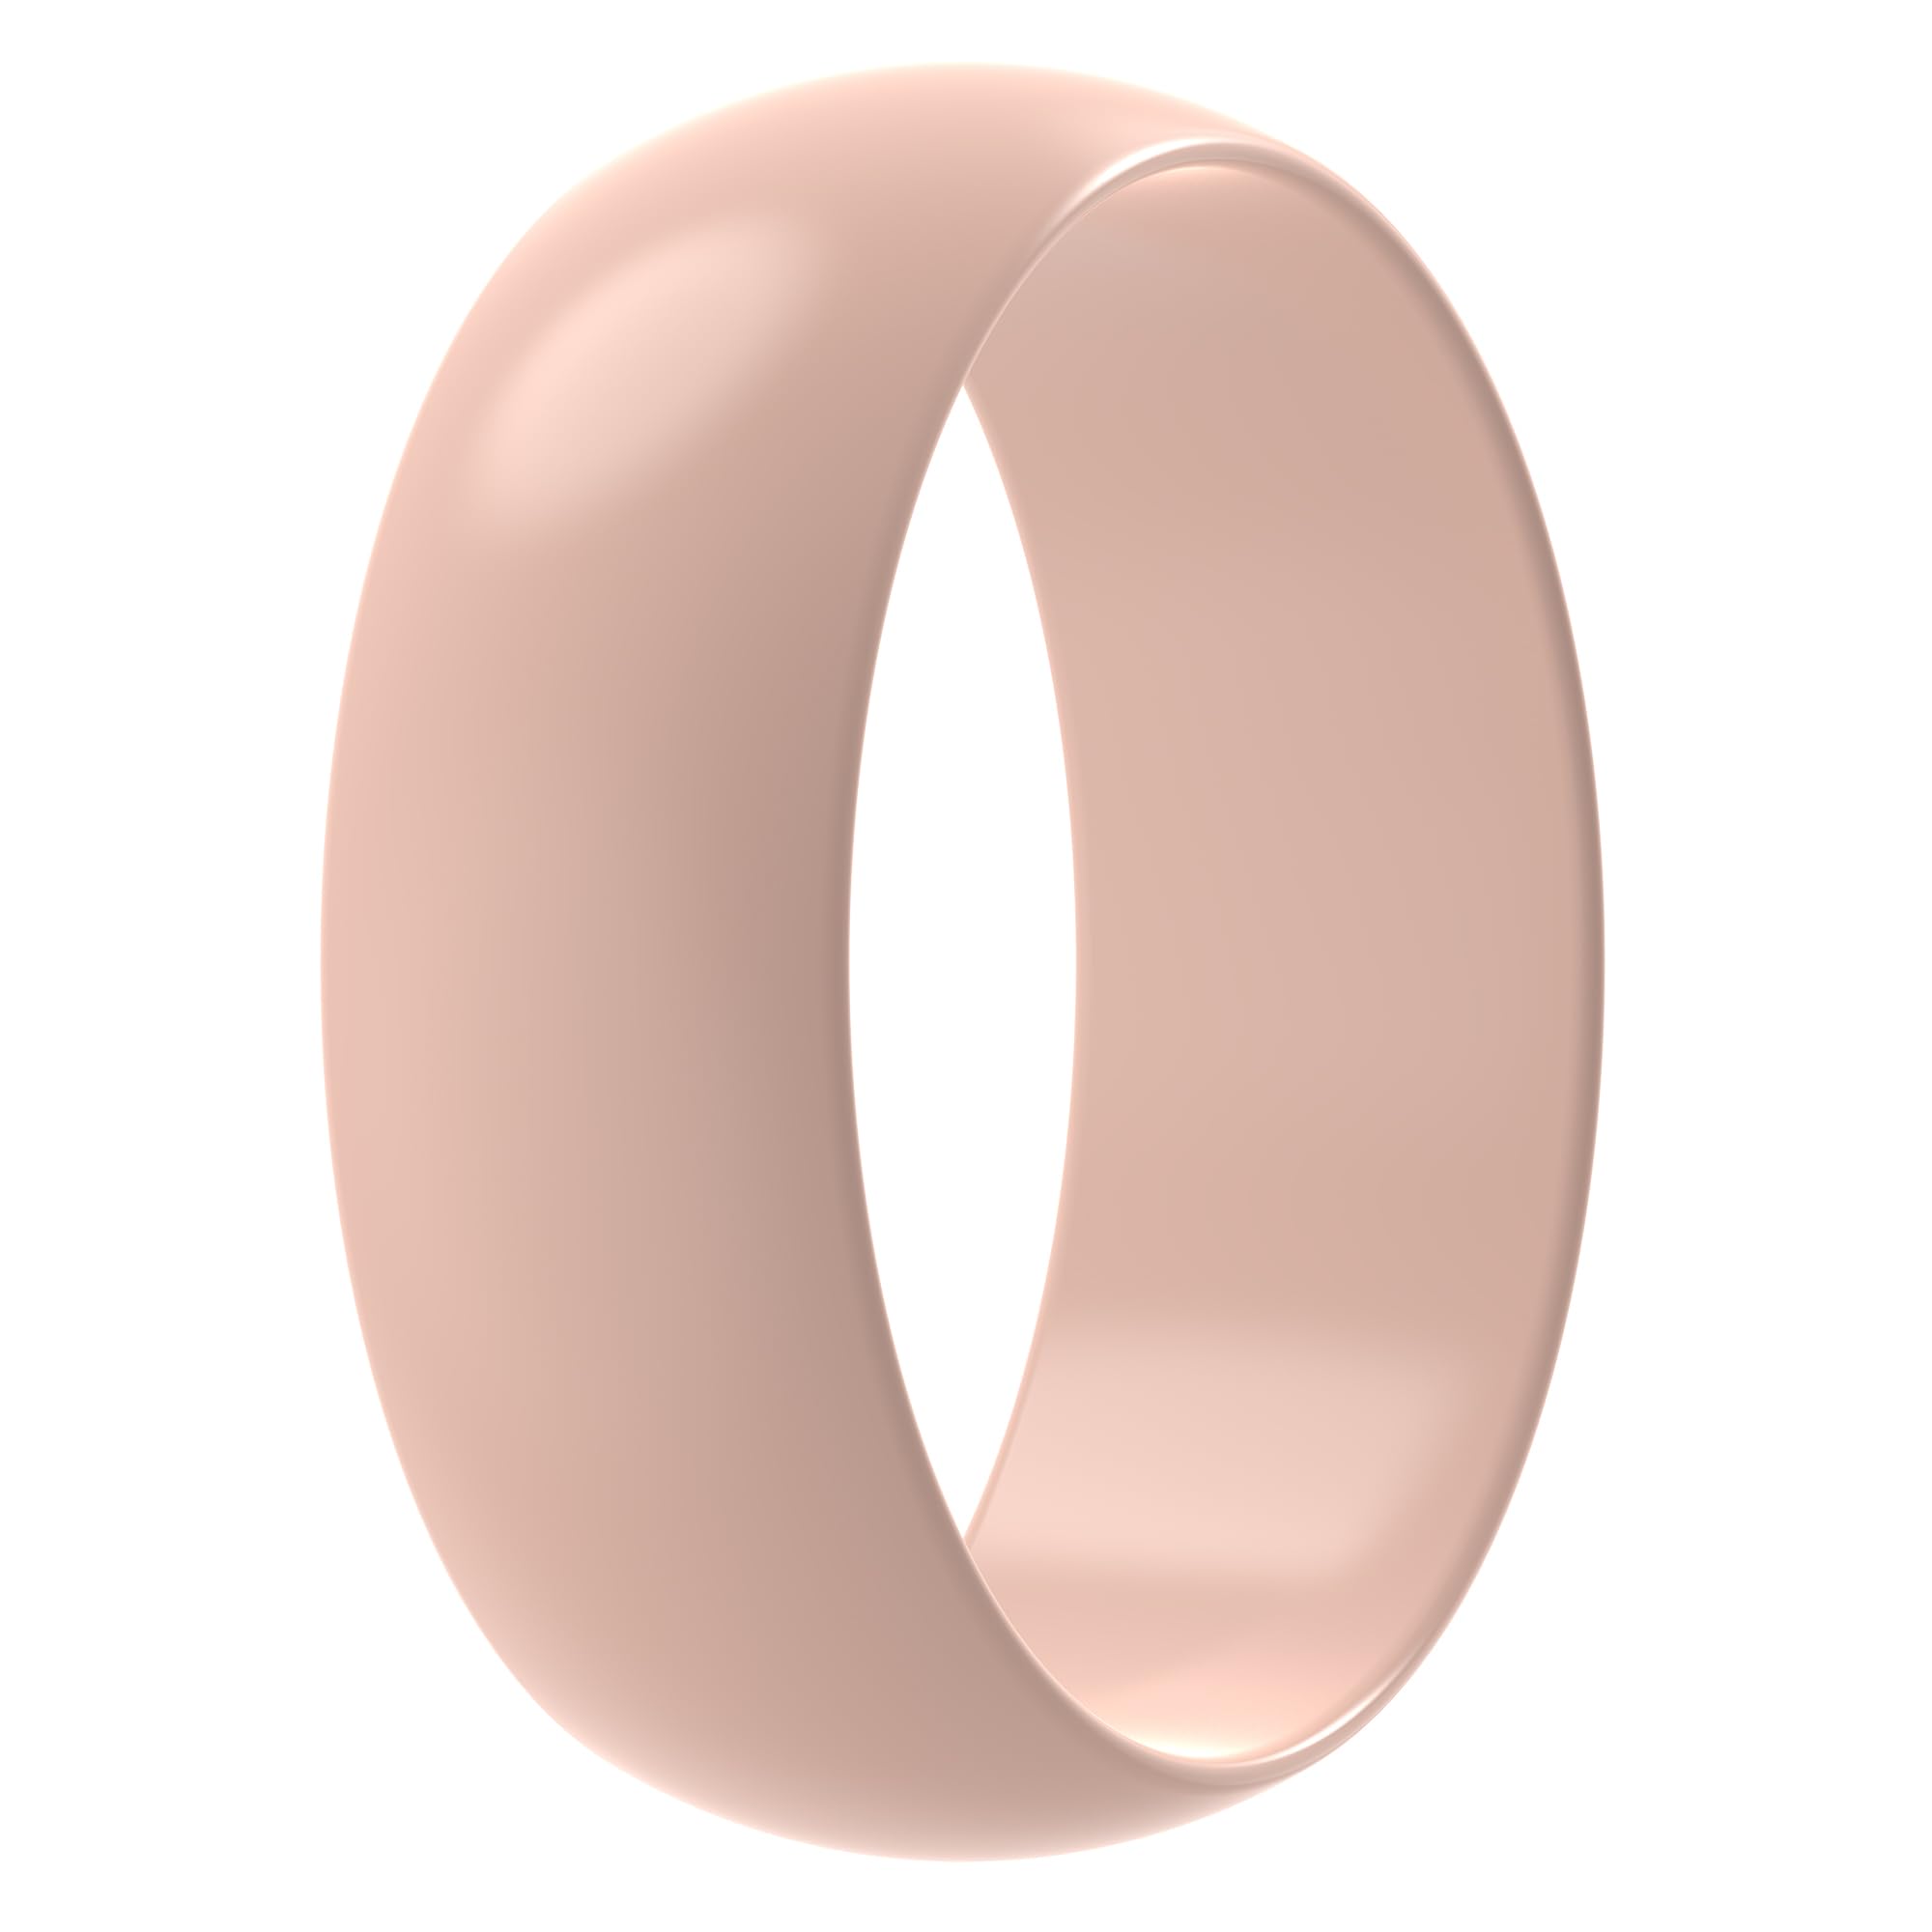 ThunderFit Silicone Wedding Ring for Men - 1 Ring (Tan, 12-12.5 (21.90mm)